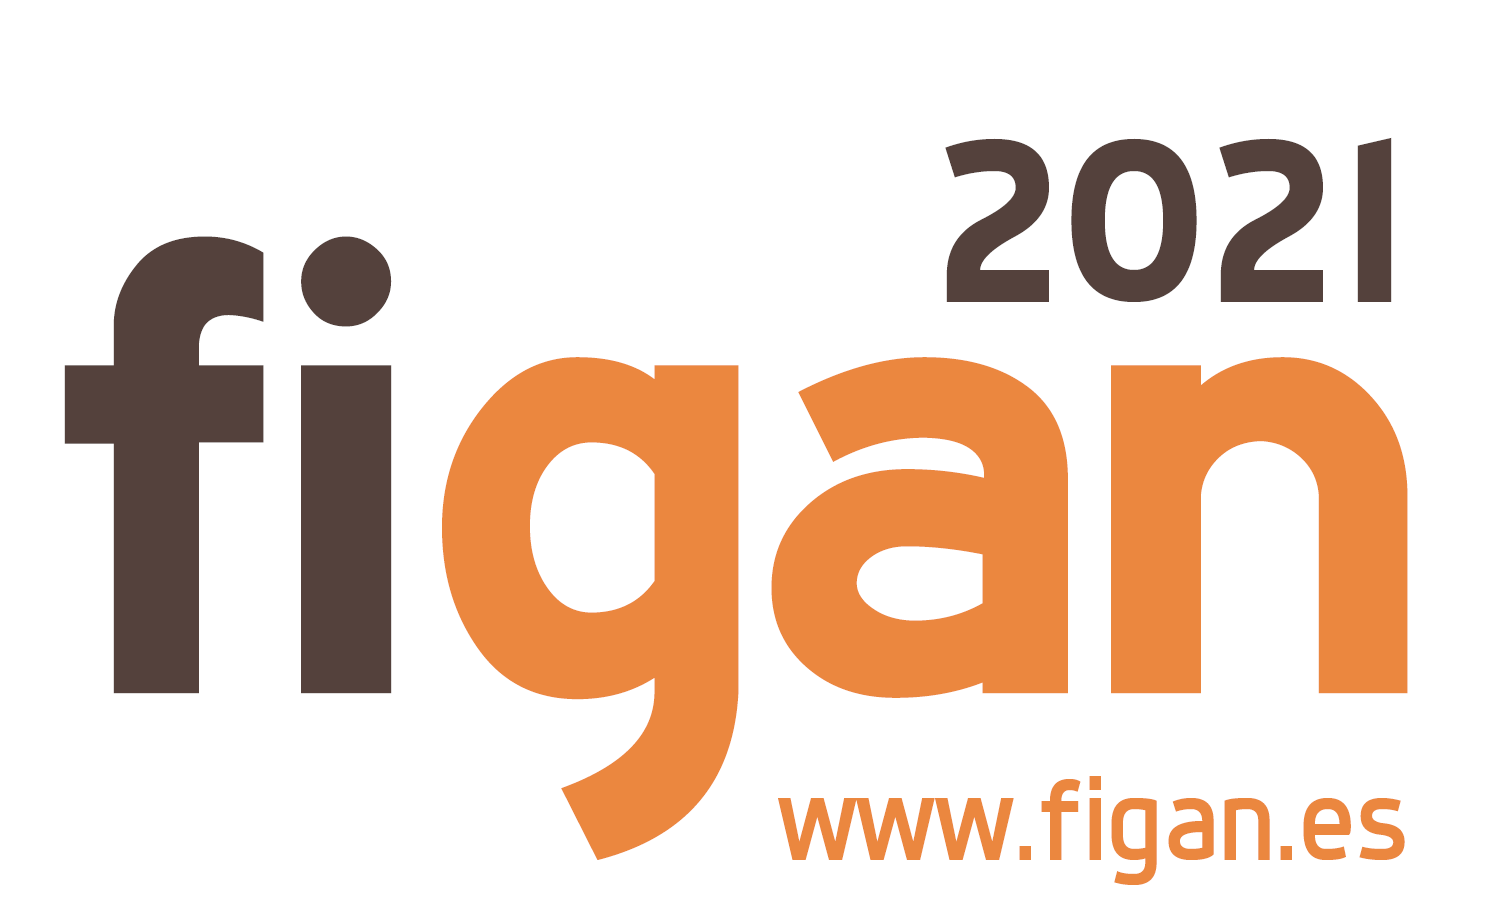 Figan-2021.png